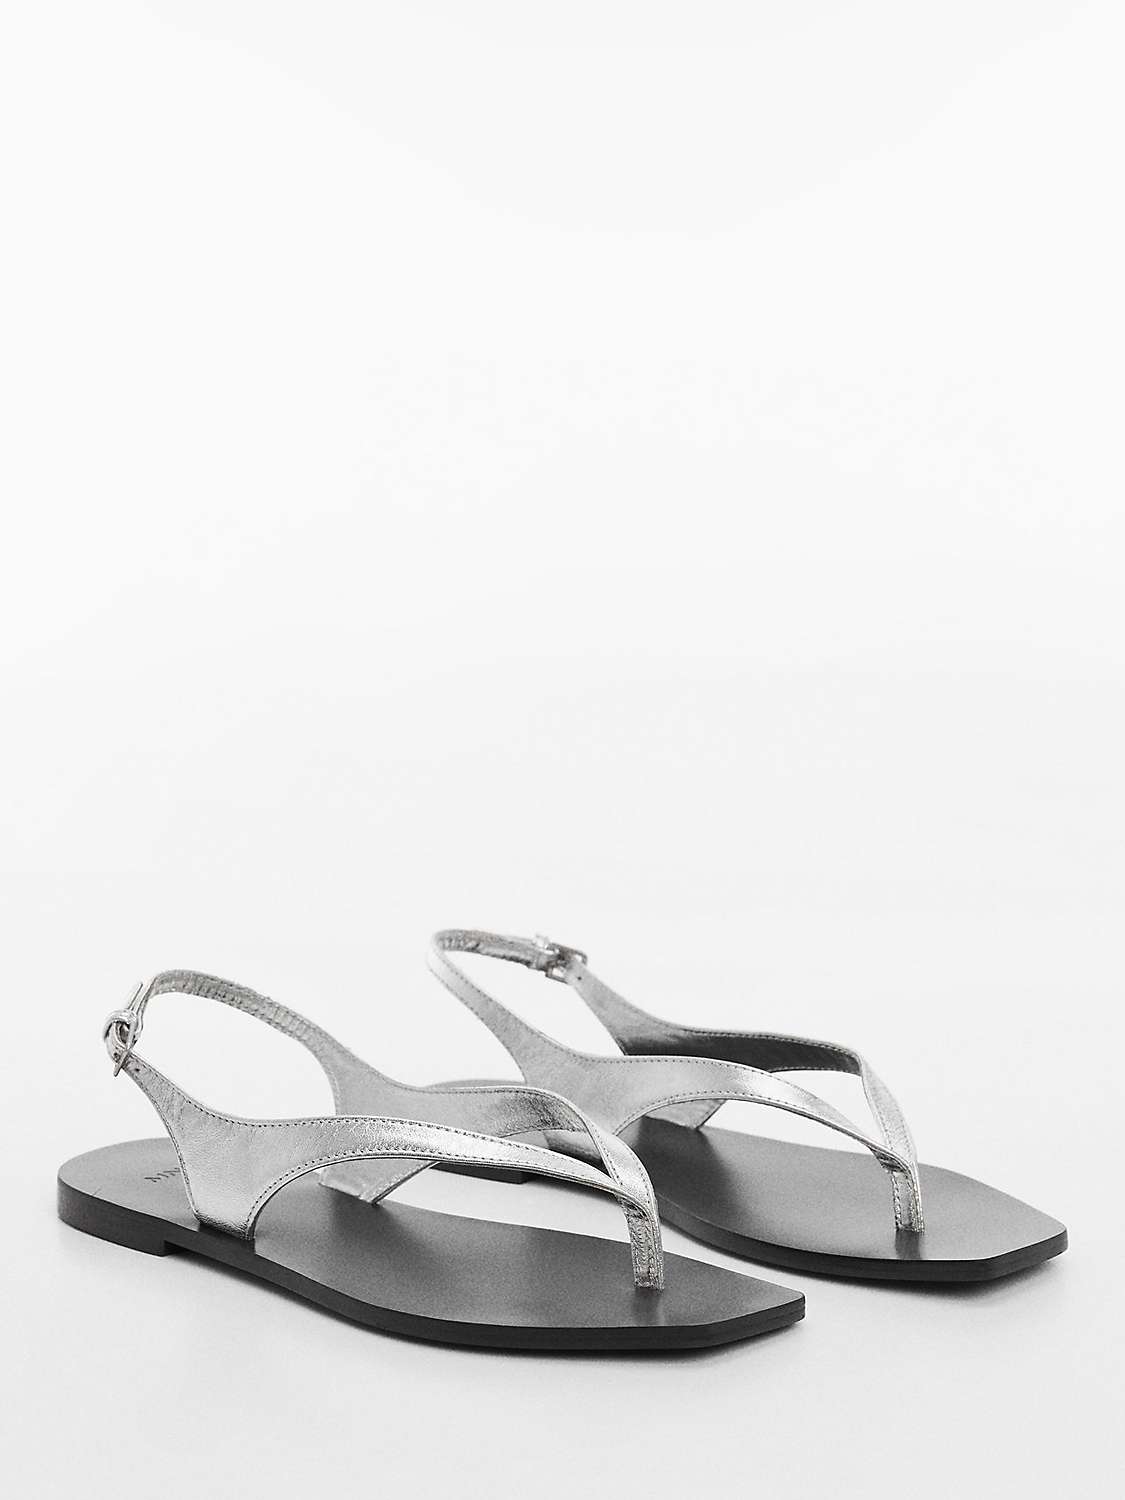 Buy Mango Amanda Leather Straps Sandals, Silver Online at johnlewis.com